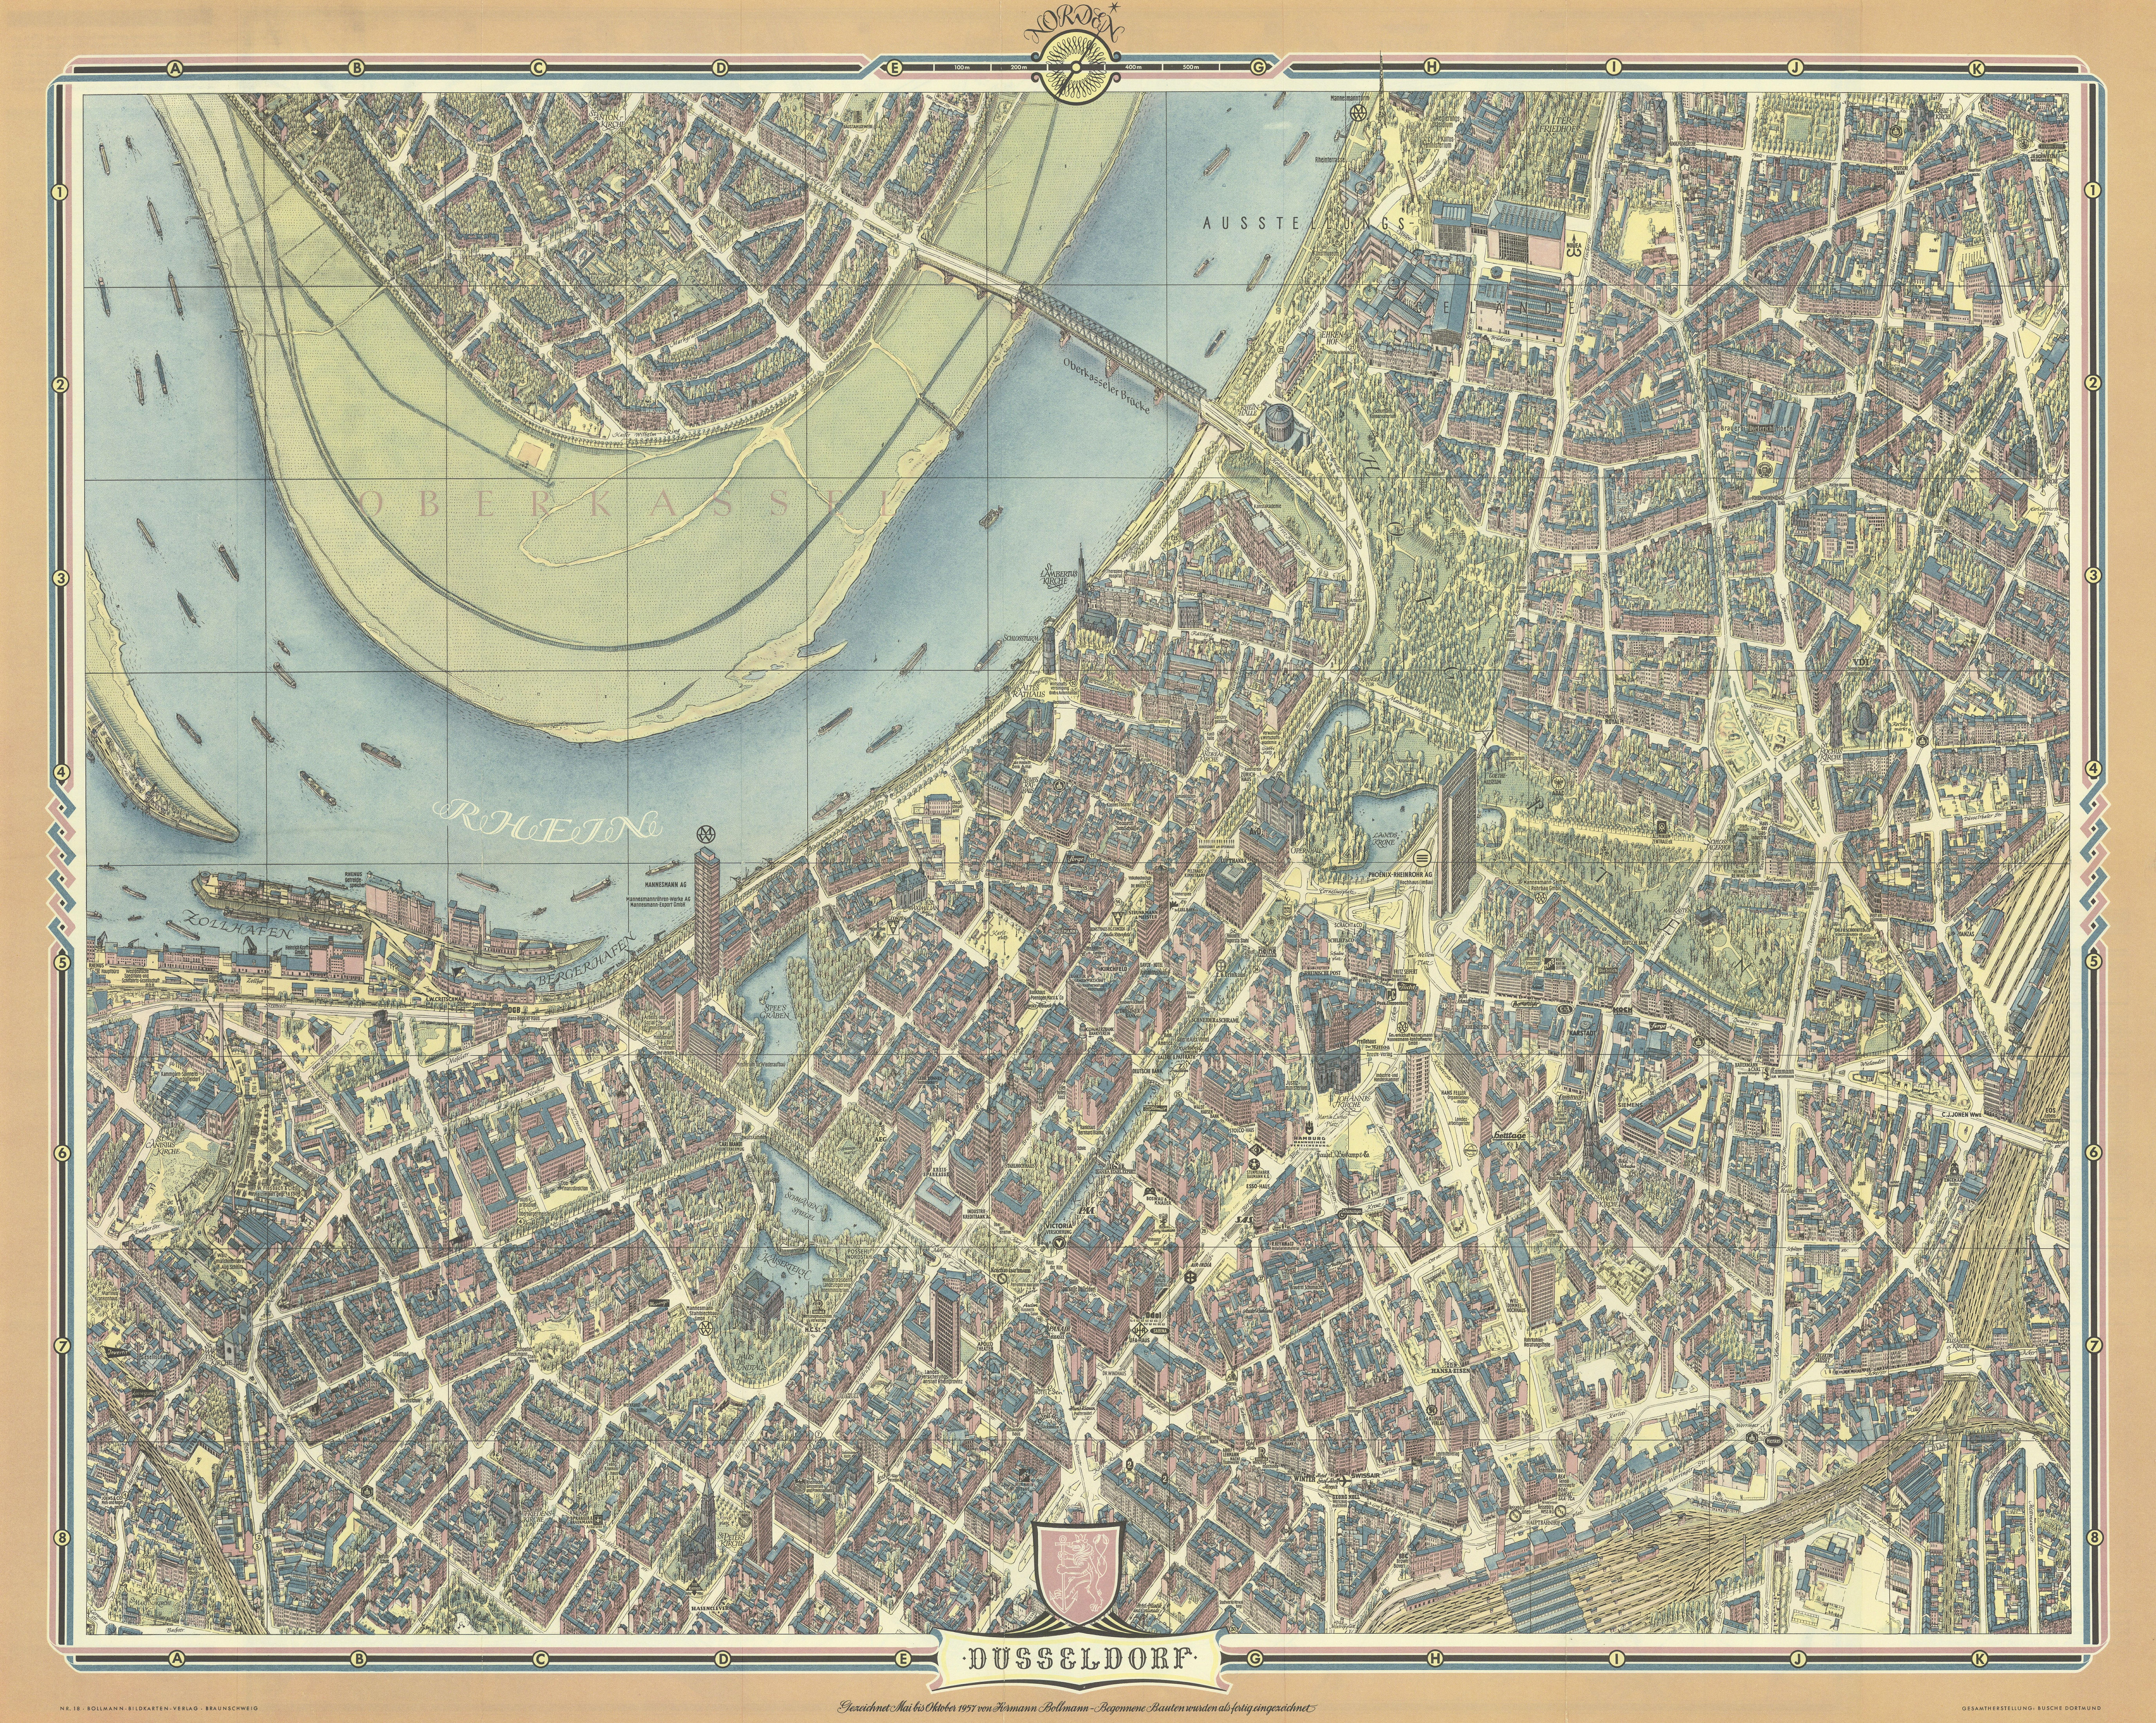 Associate Product Düsseldorf pictorial bird's eye view city plan by Hermann Bollmann 1957 map